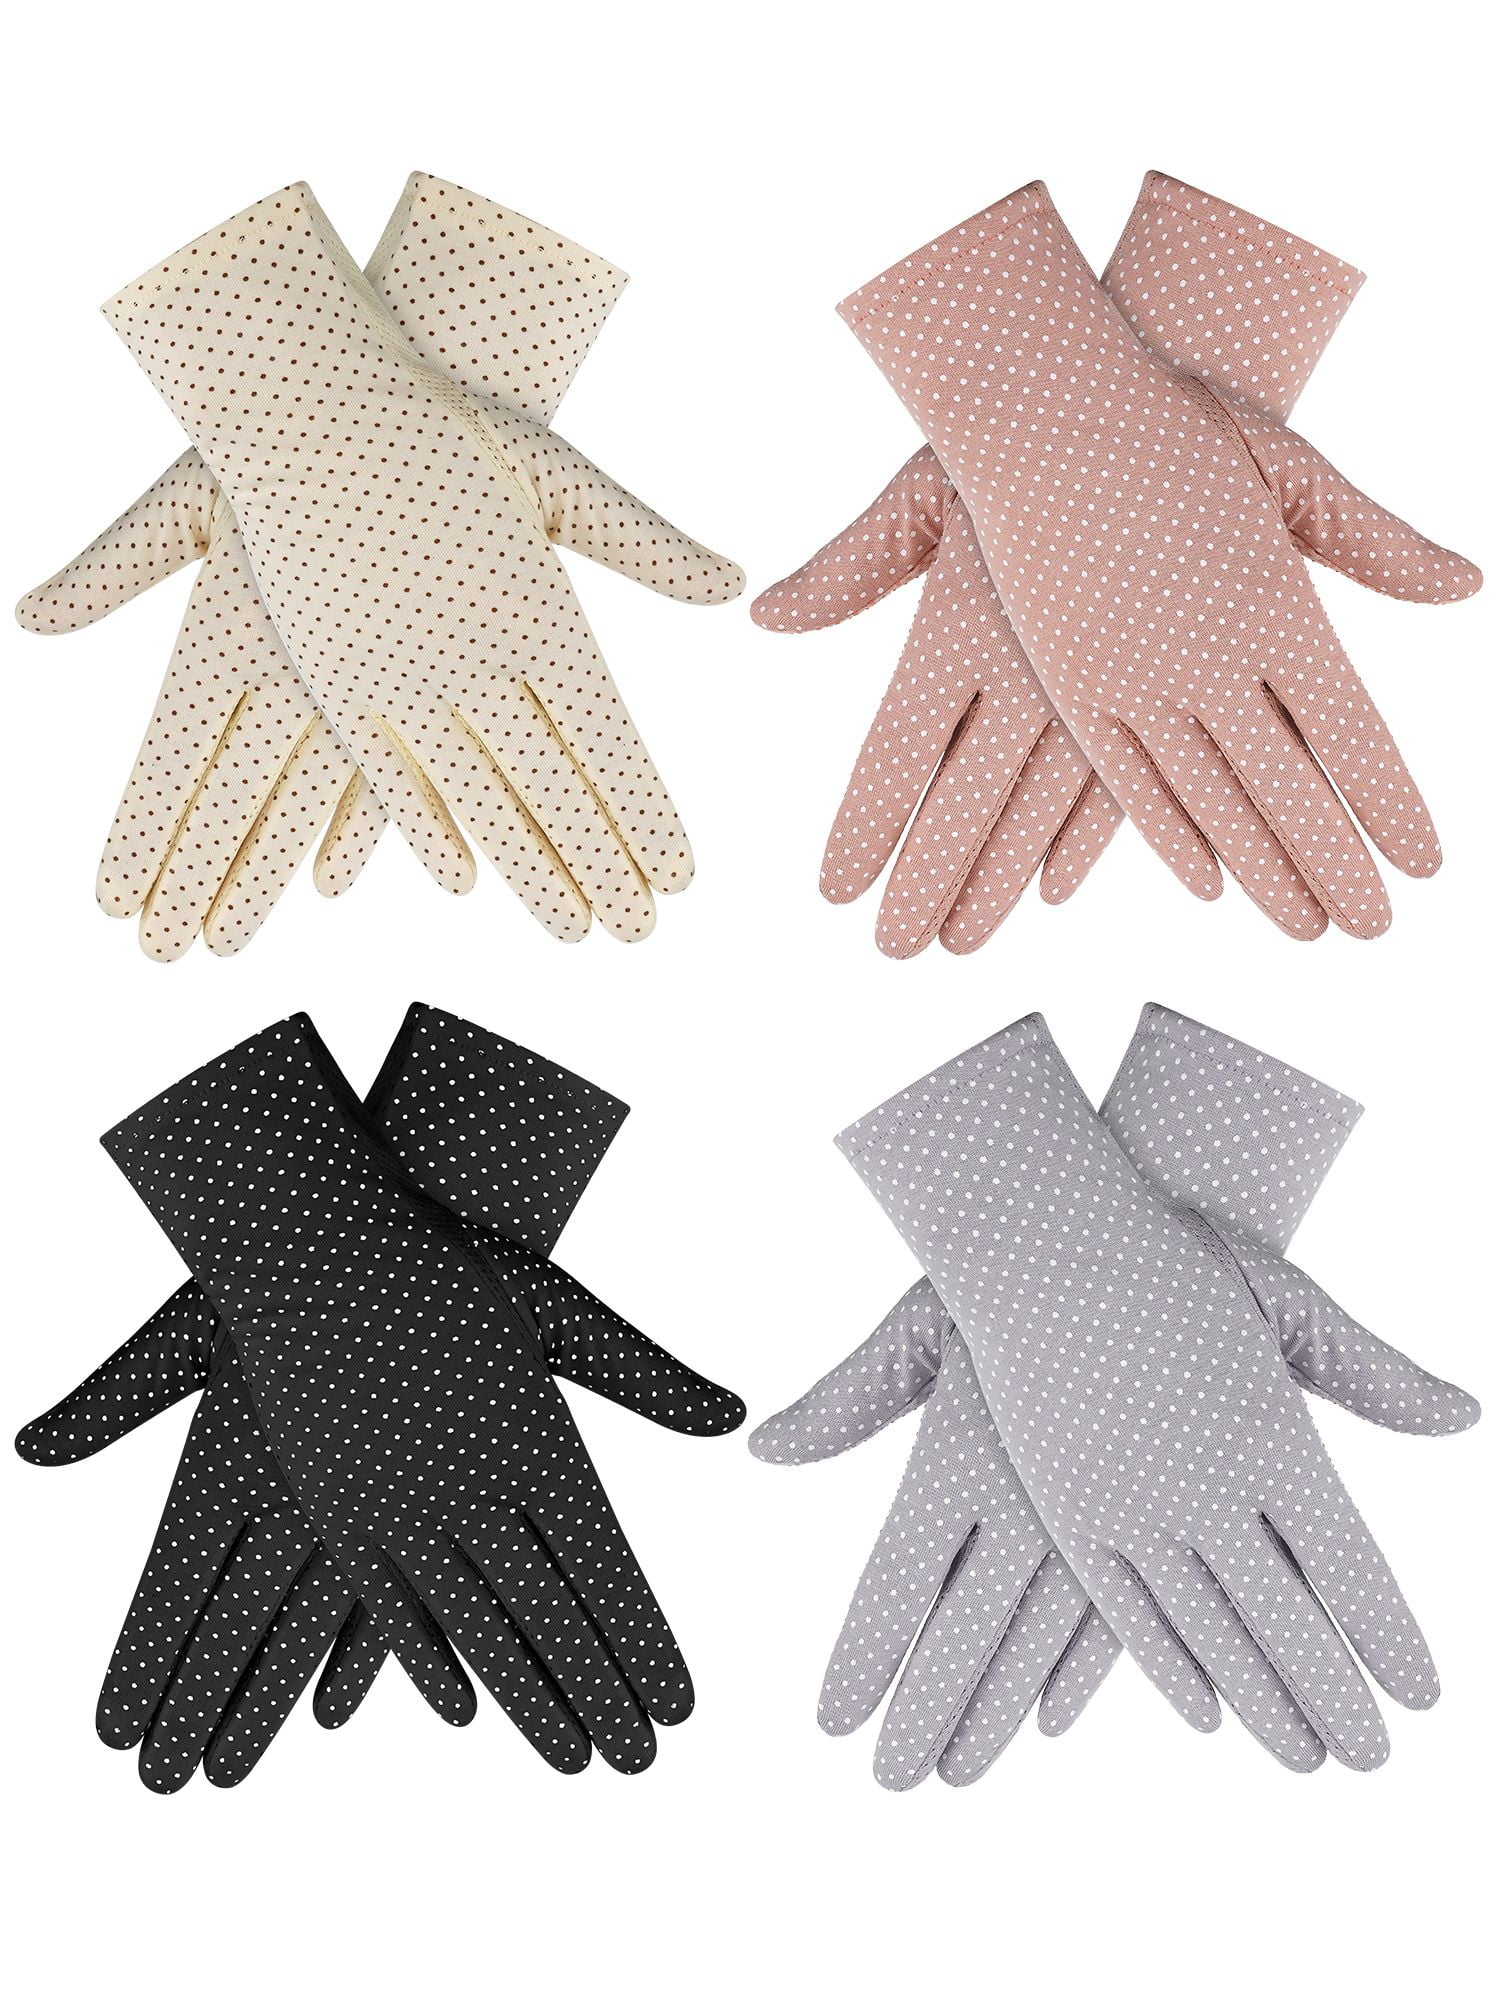 Blulu 4 Pairs Summer UV Protection Sunblock Gloves Non-slip Touchscreen Driving Gloves Bowknot Floral Gloves for Women Girls Black 2, Khaki 2, Pink 2, Beige 2 